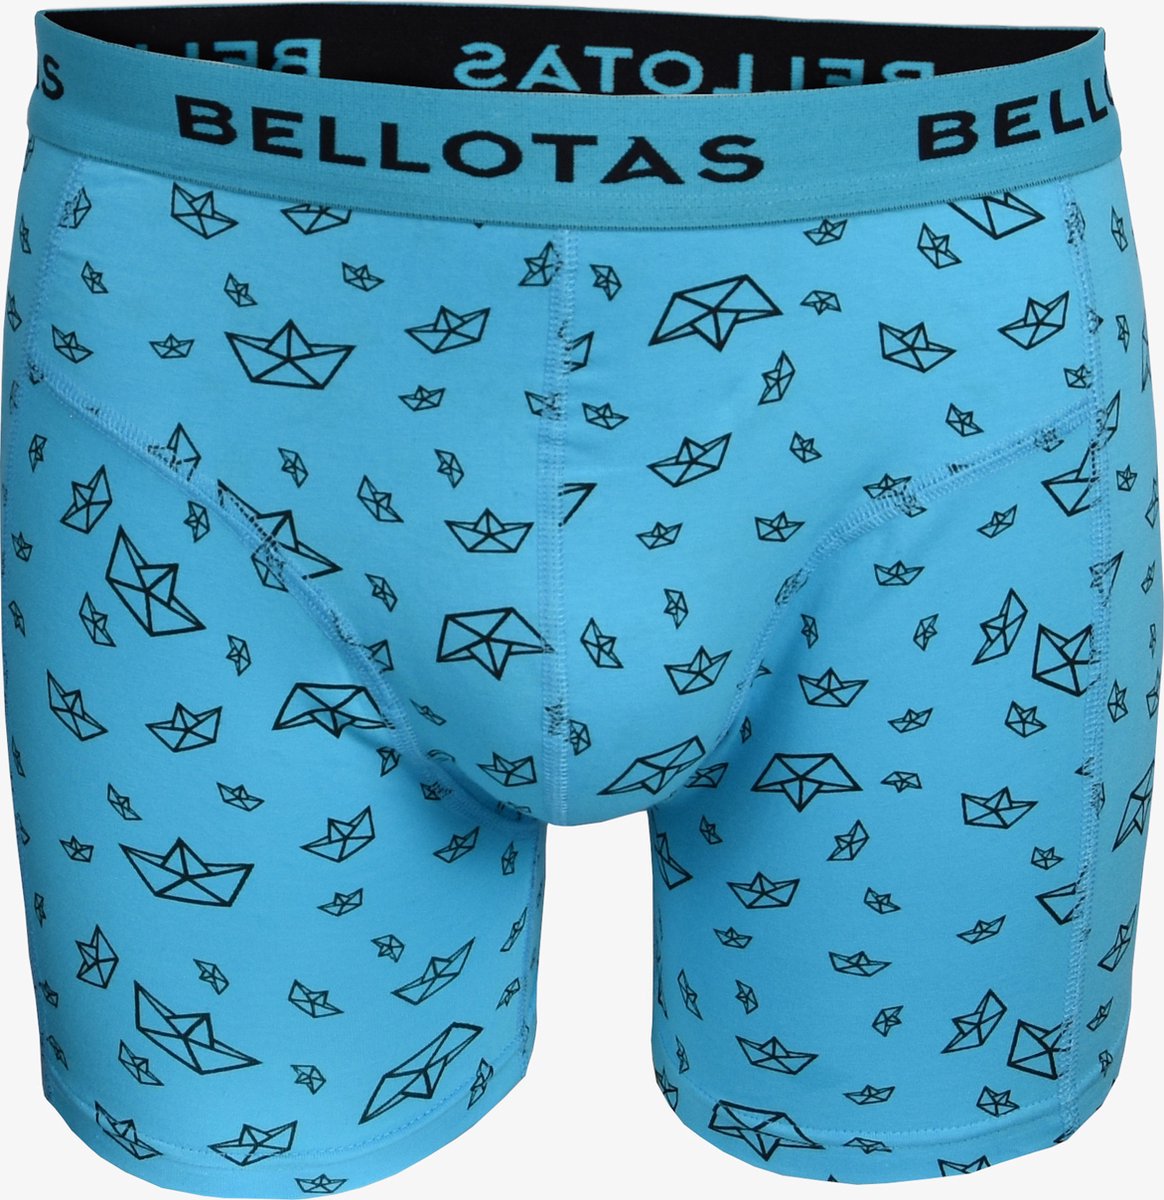 Bellotas - Boxershort - Aster XL